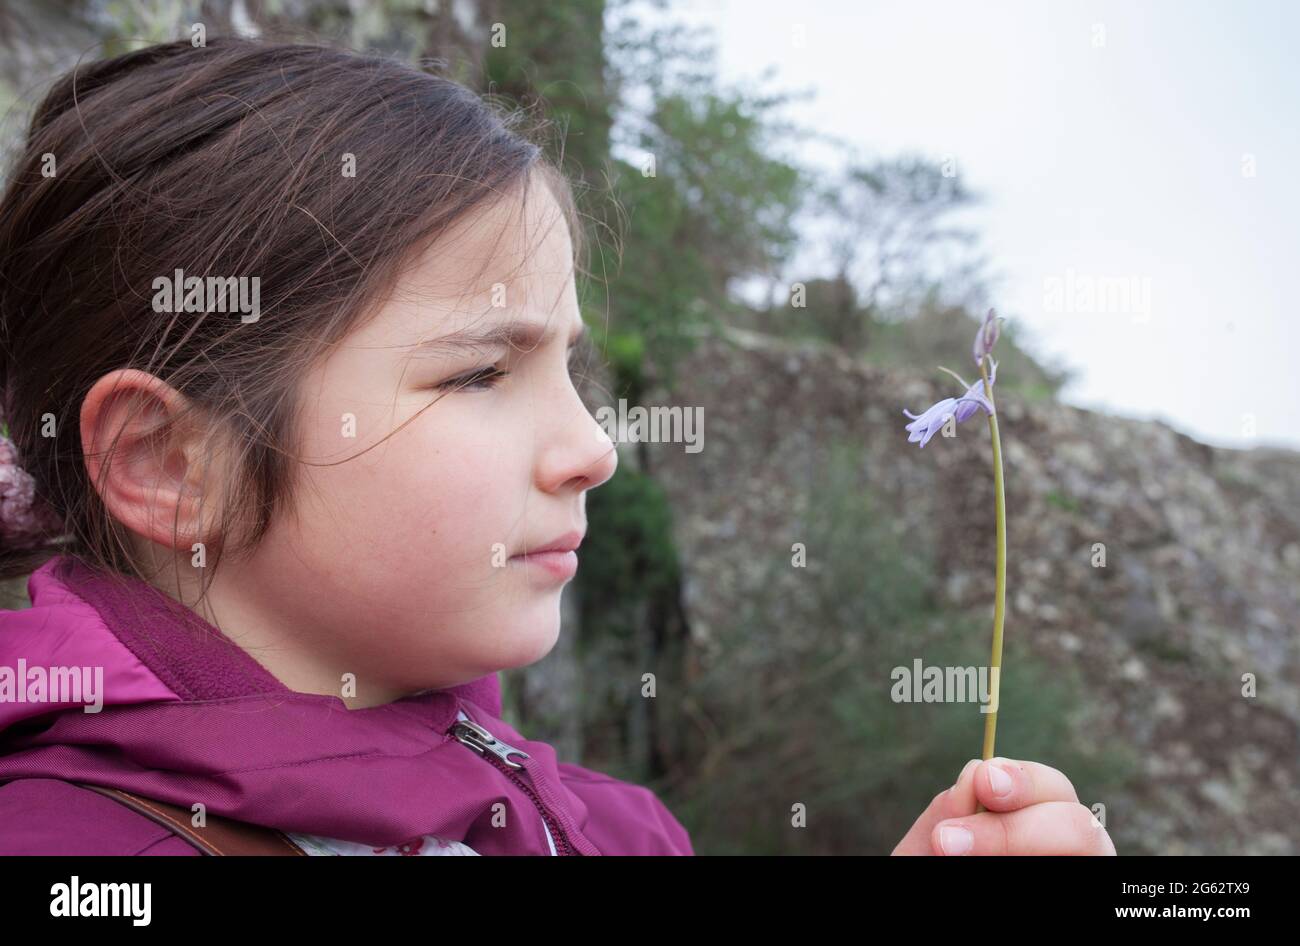 Child girl observing little wild flower. Botany for inquisitive children concept Stock Photo